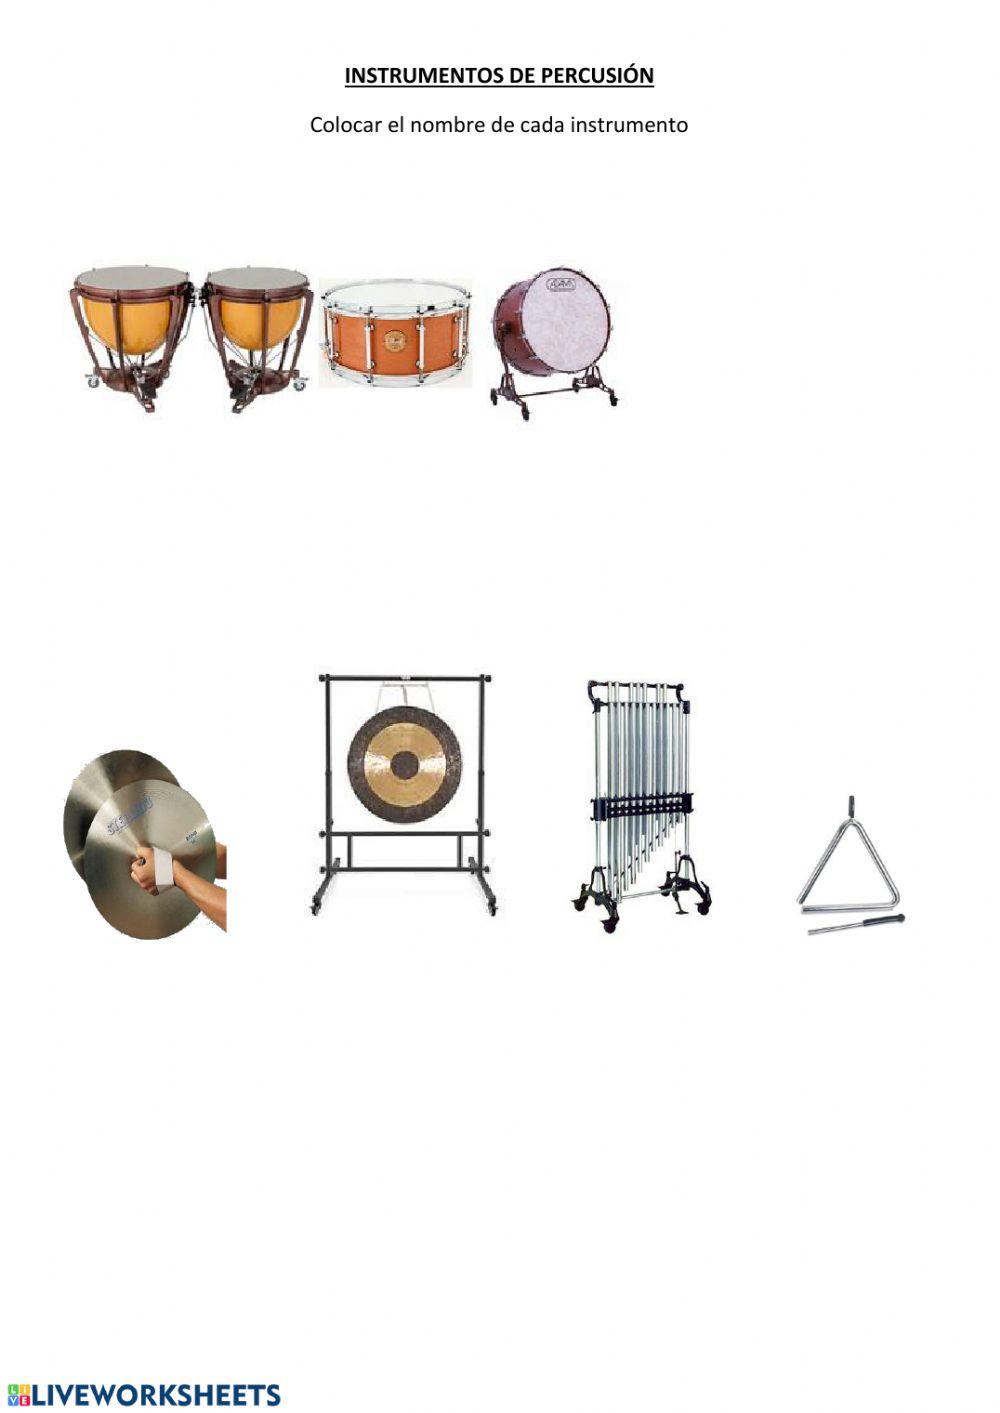 Orquesta sinfónica: instrumentos de percusión